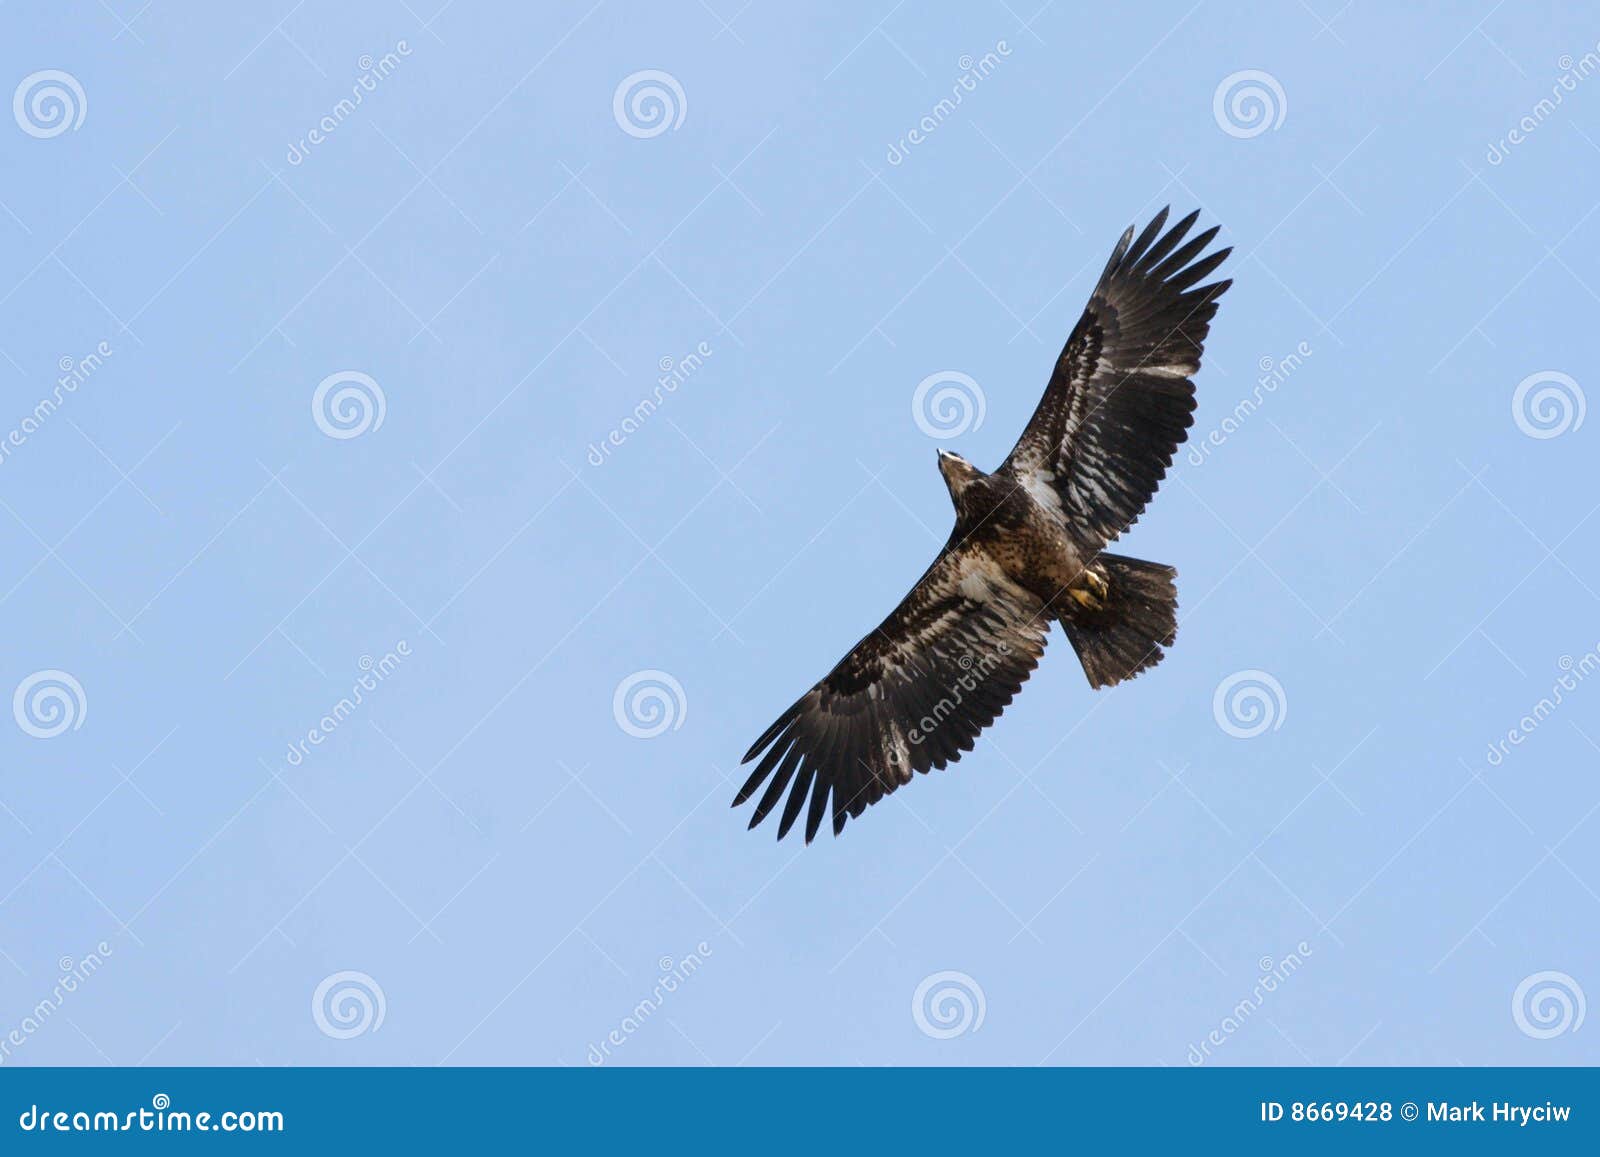 hawk soaring